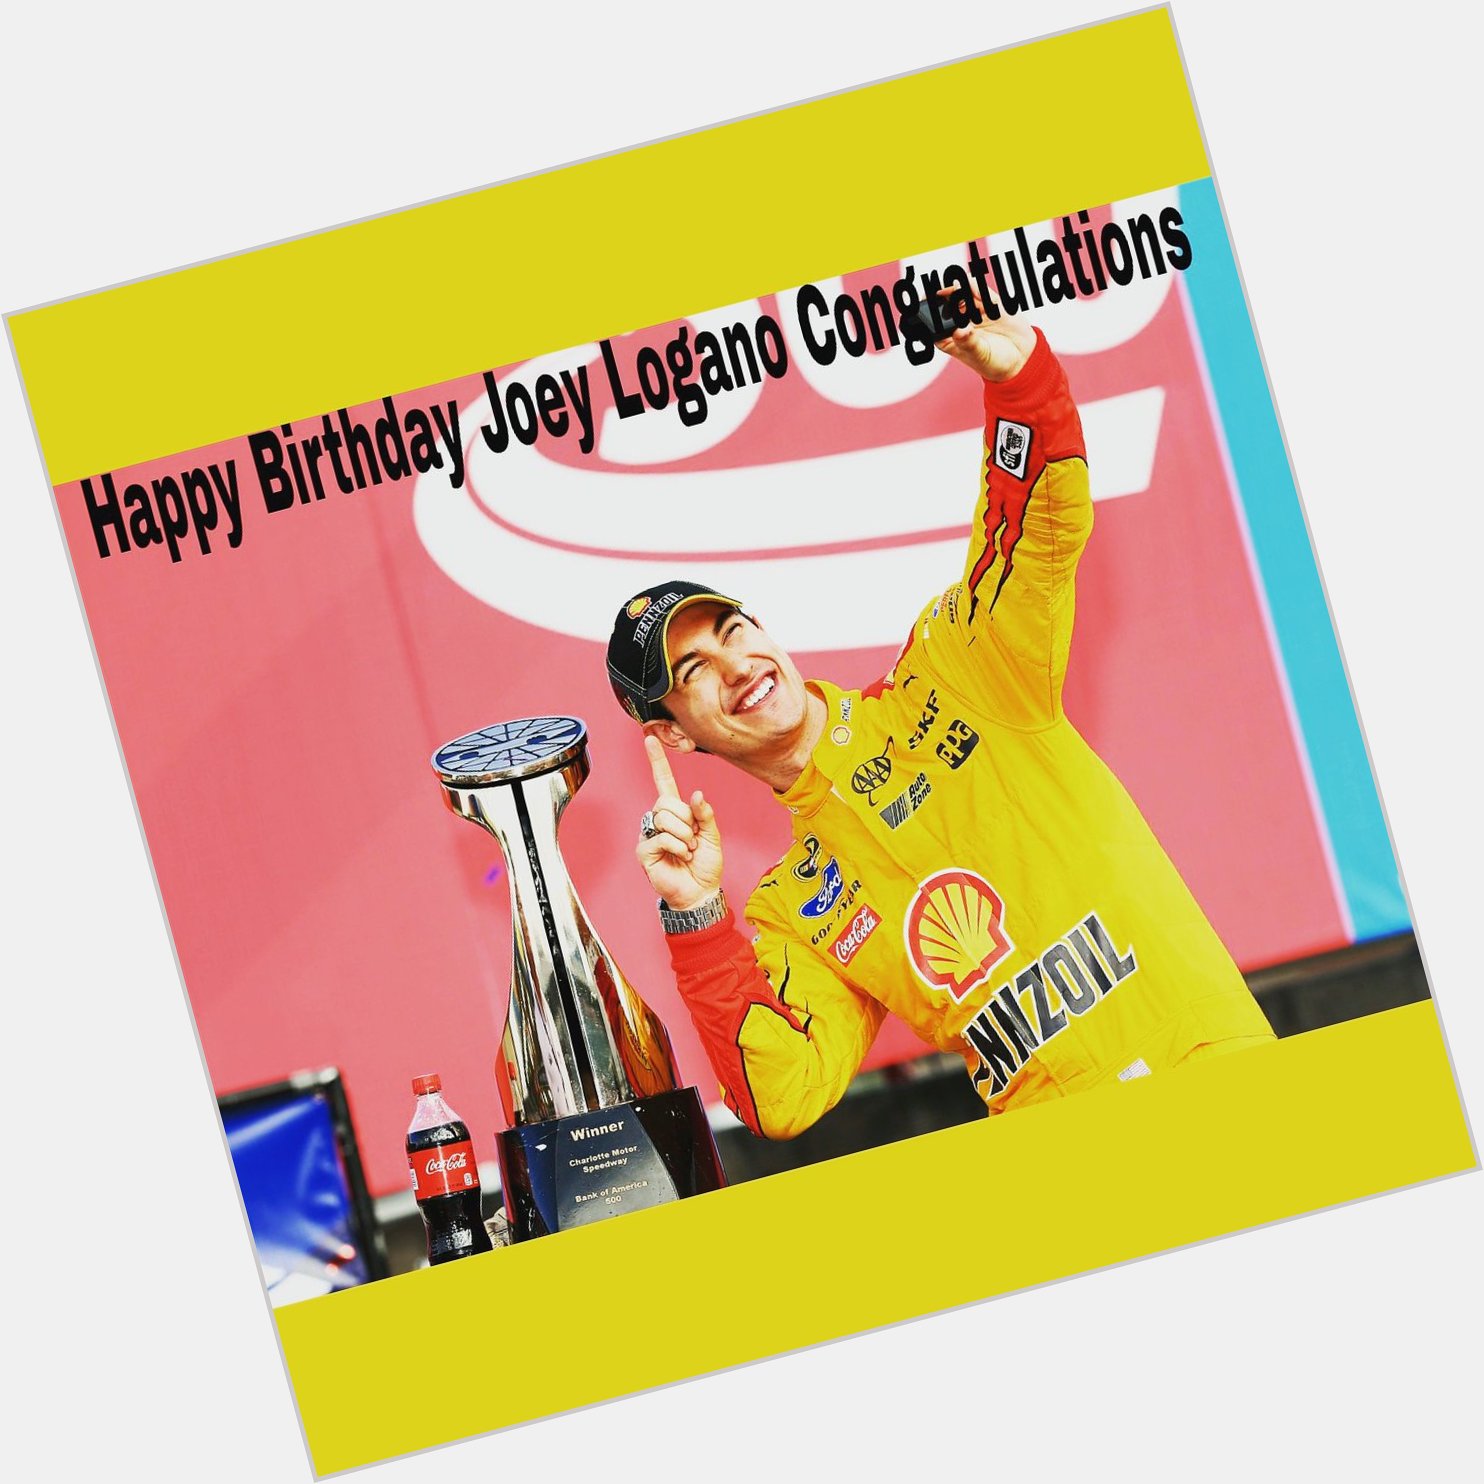 Happy Birthday Joey Logano Congratulations!!!! 